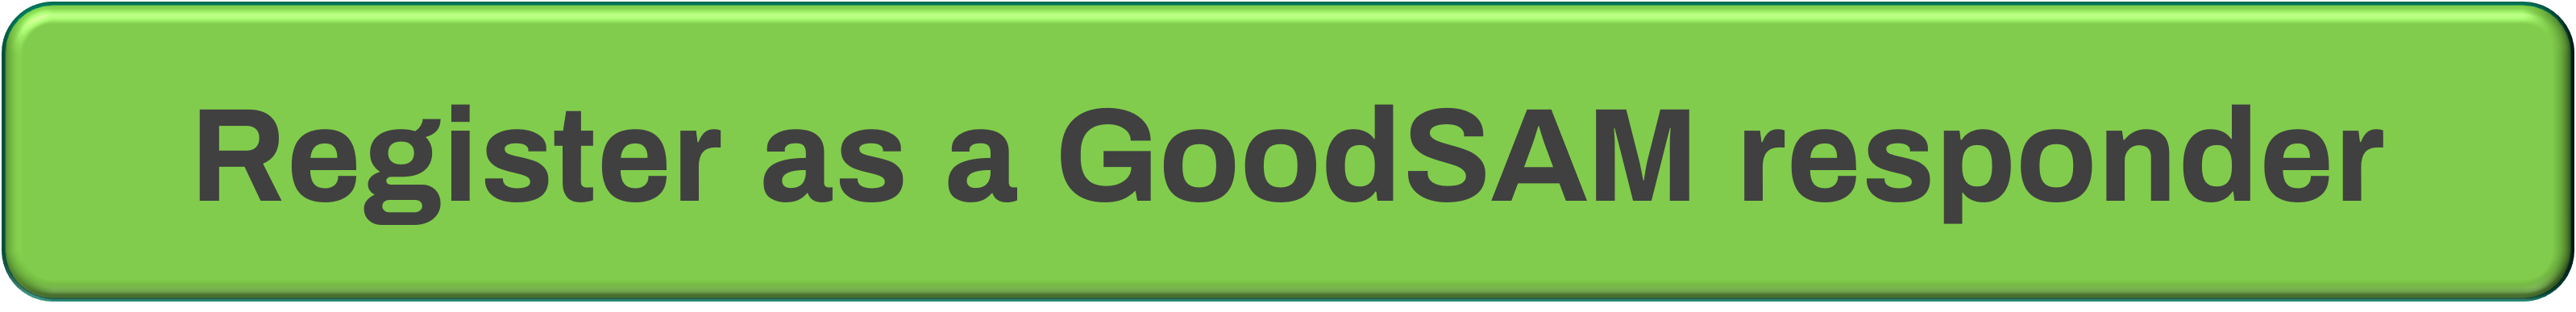 Registration button for GoodSAM